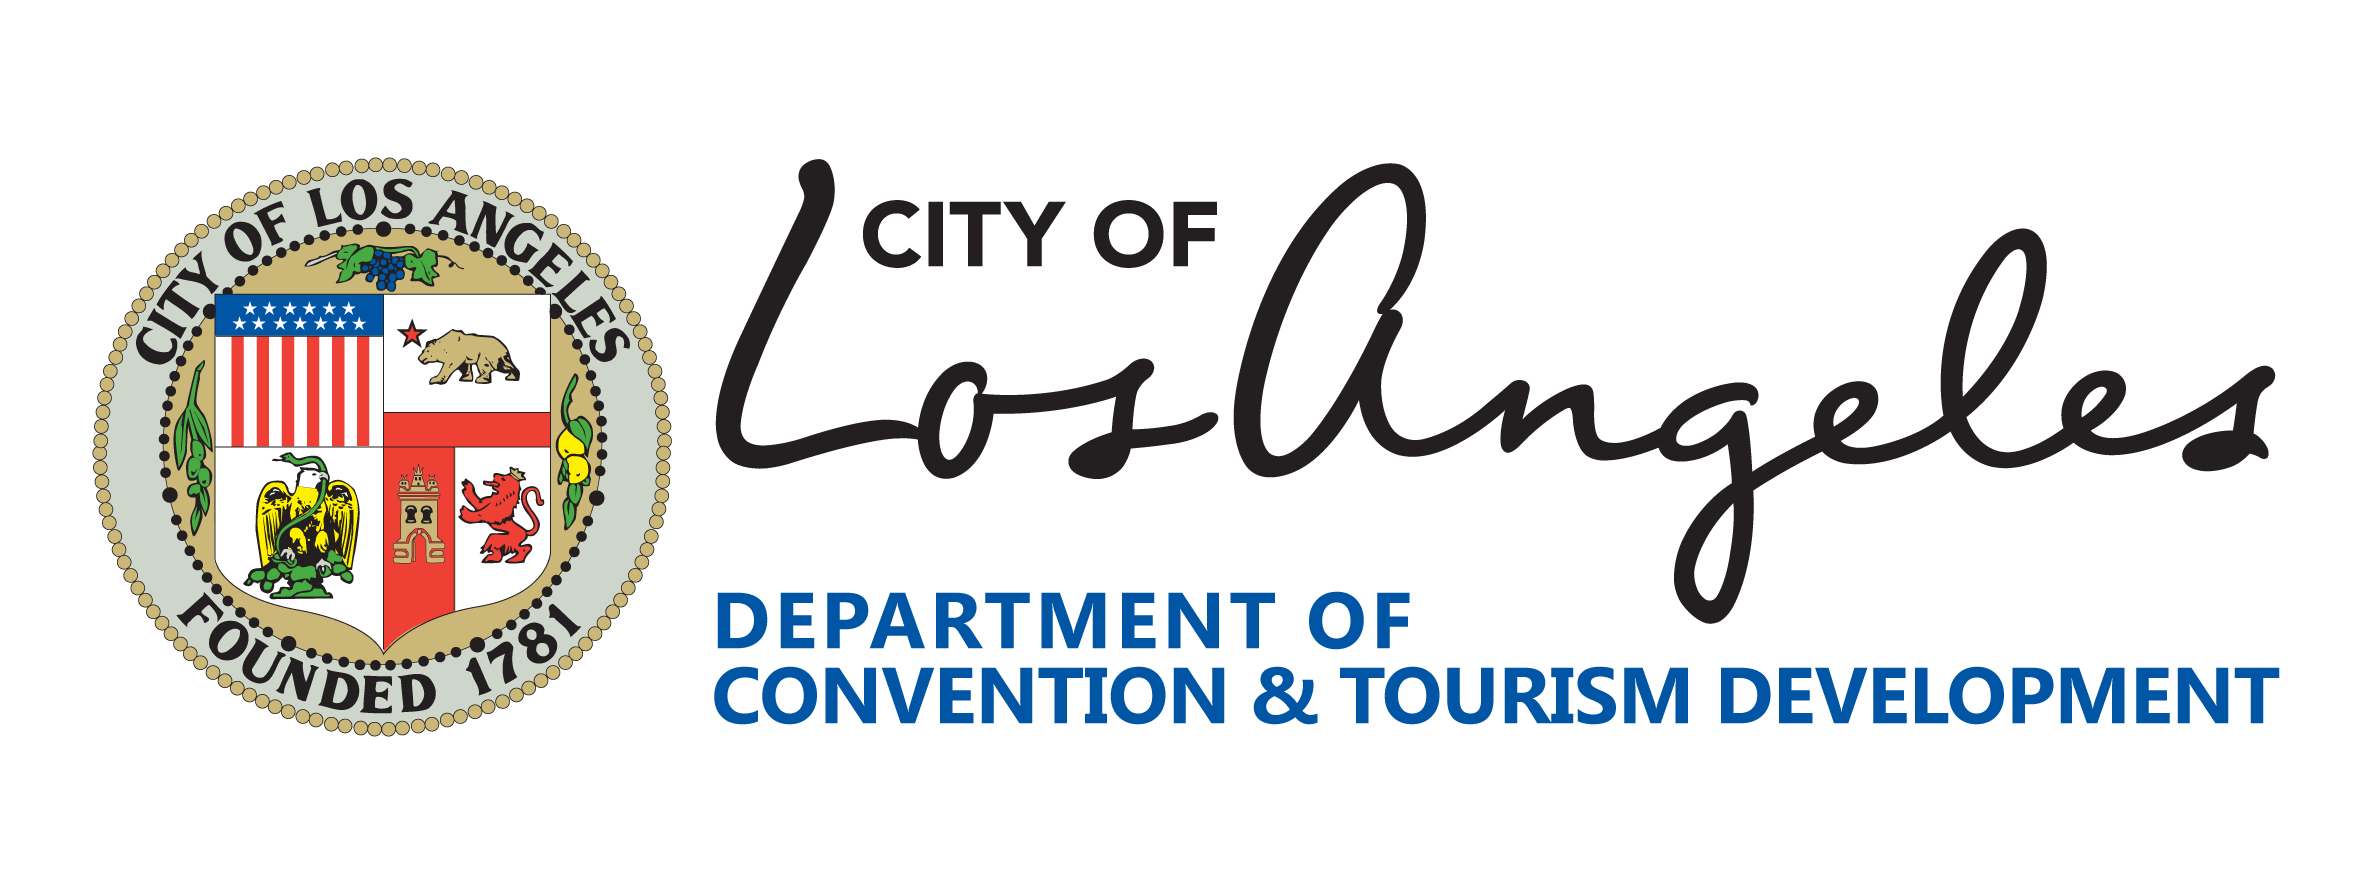 Los Angeles Logo - Department of Convention & Tourism Development |